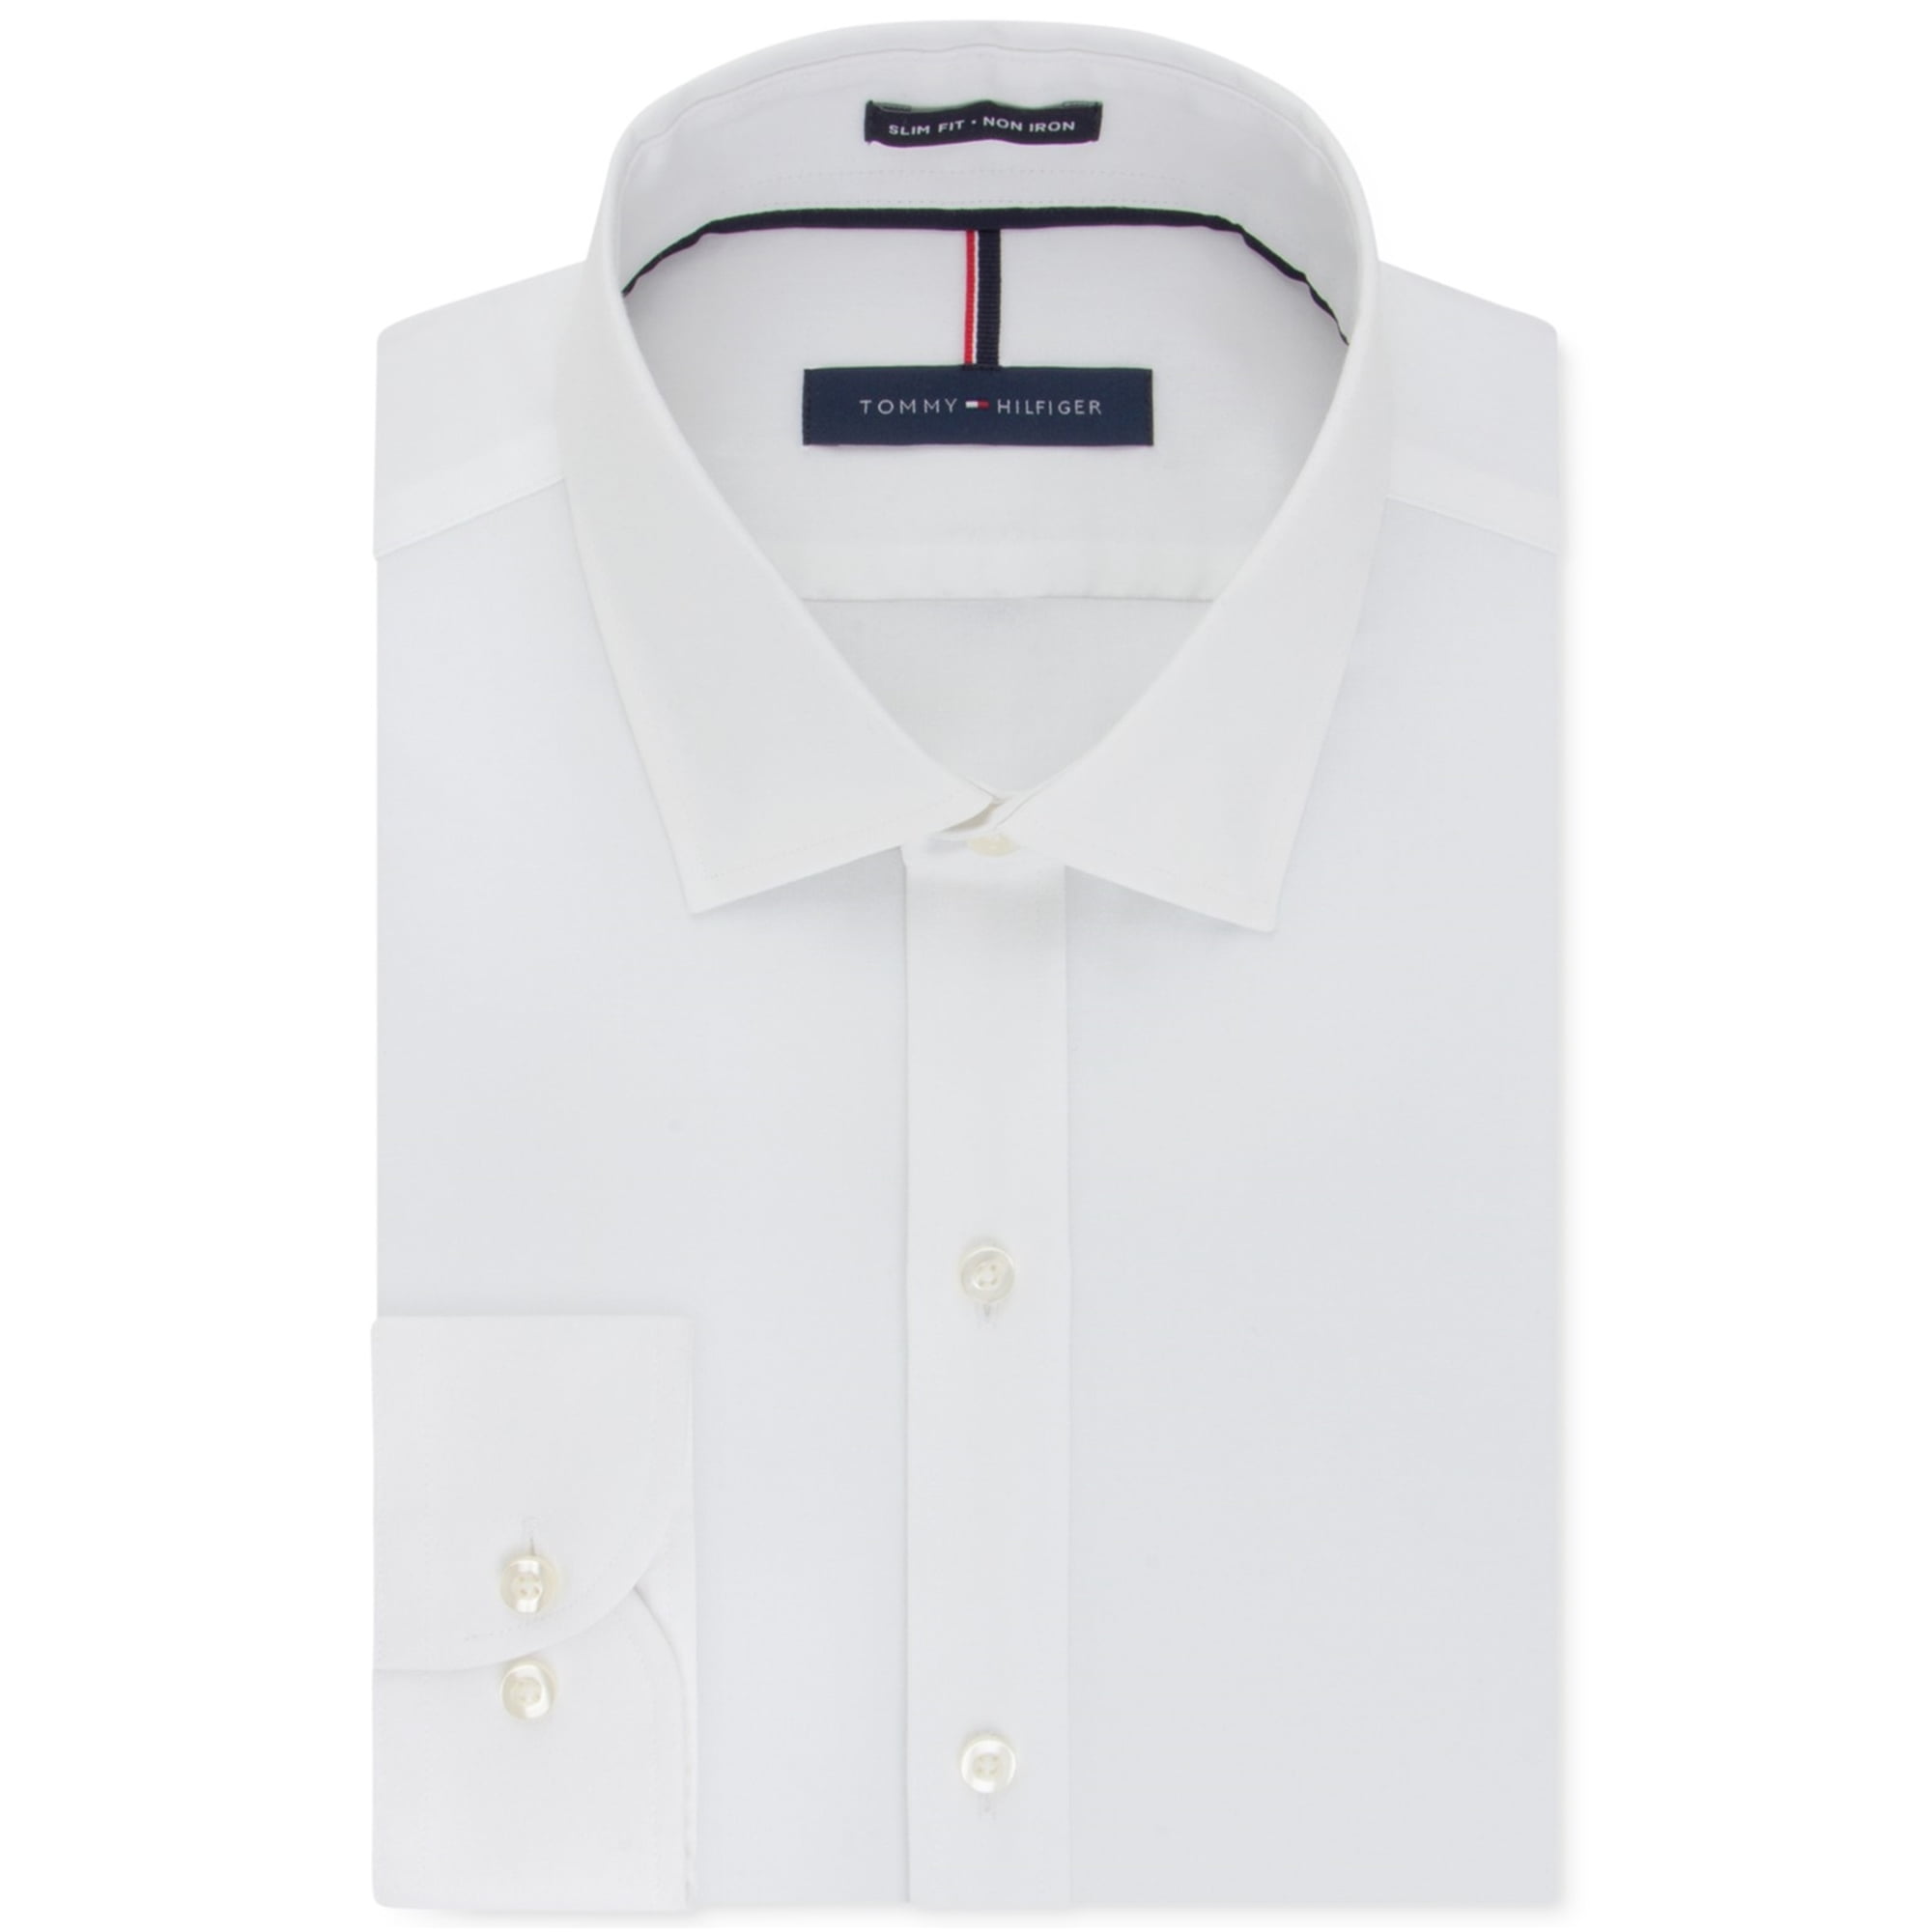 Hilfiger Mens Non-Iron Button Up Shirt white 16 -